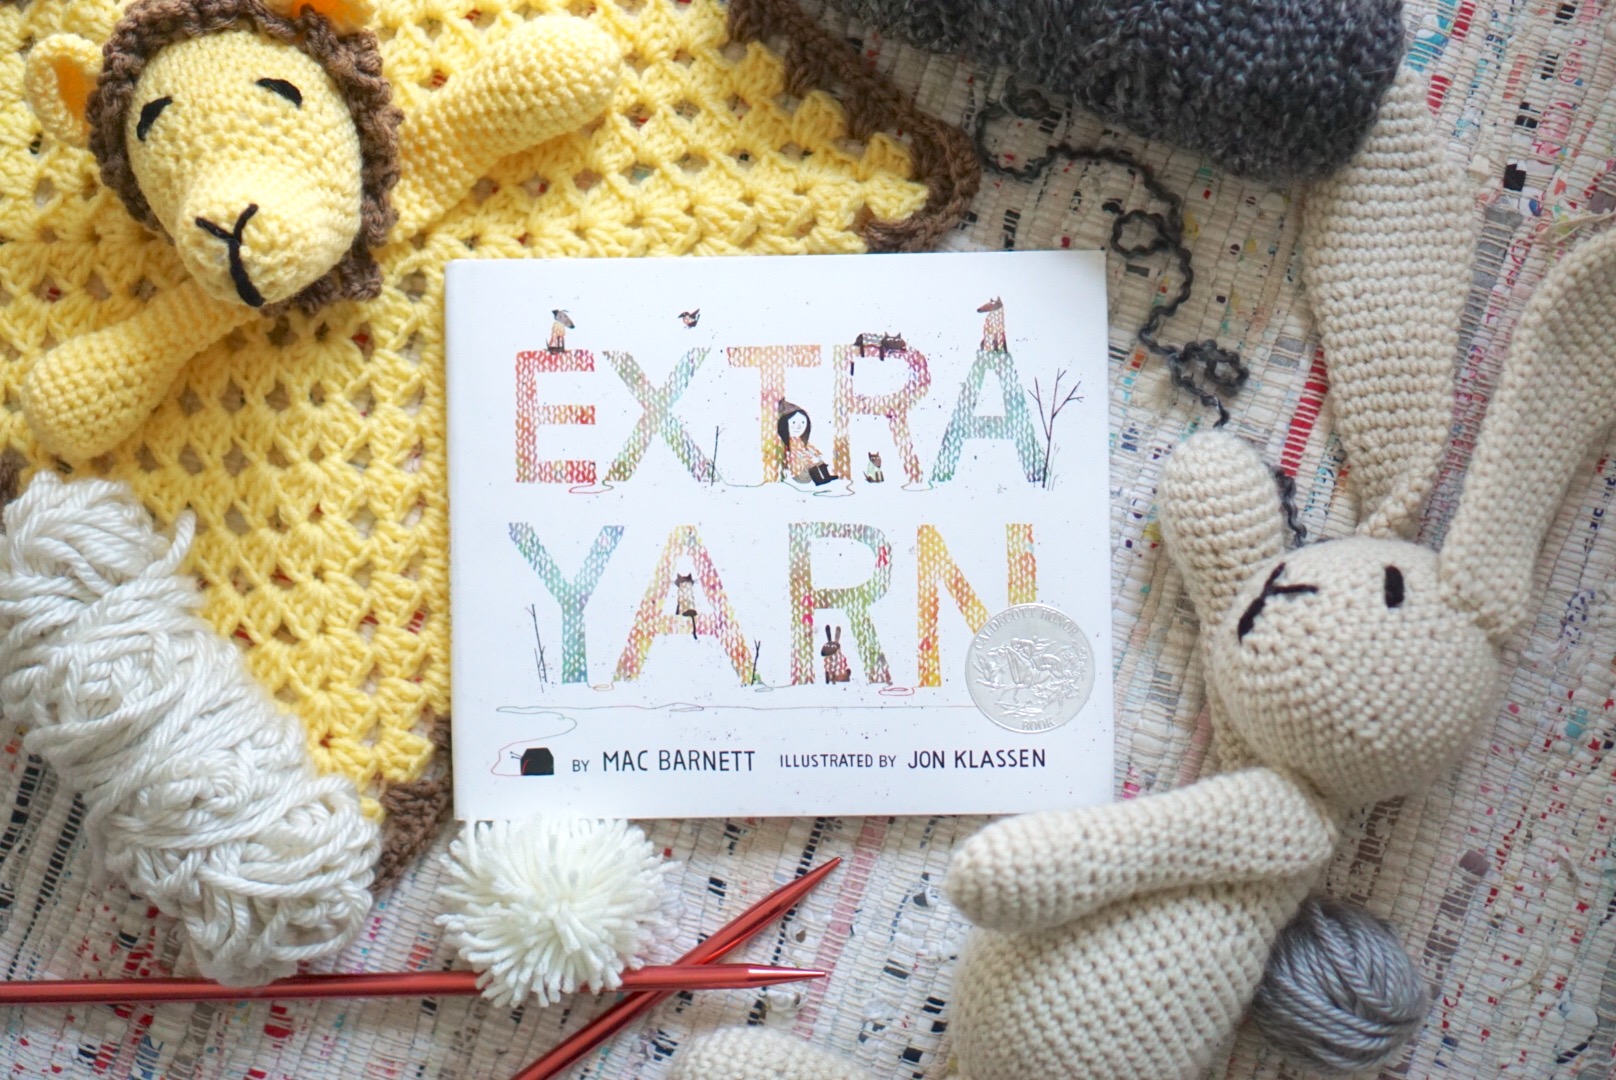 Extra Yarn by Barnett 22 Book Extension Activities NO PREP